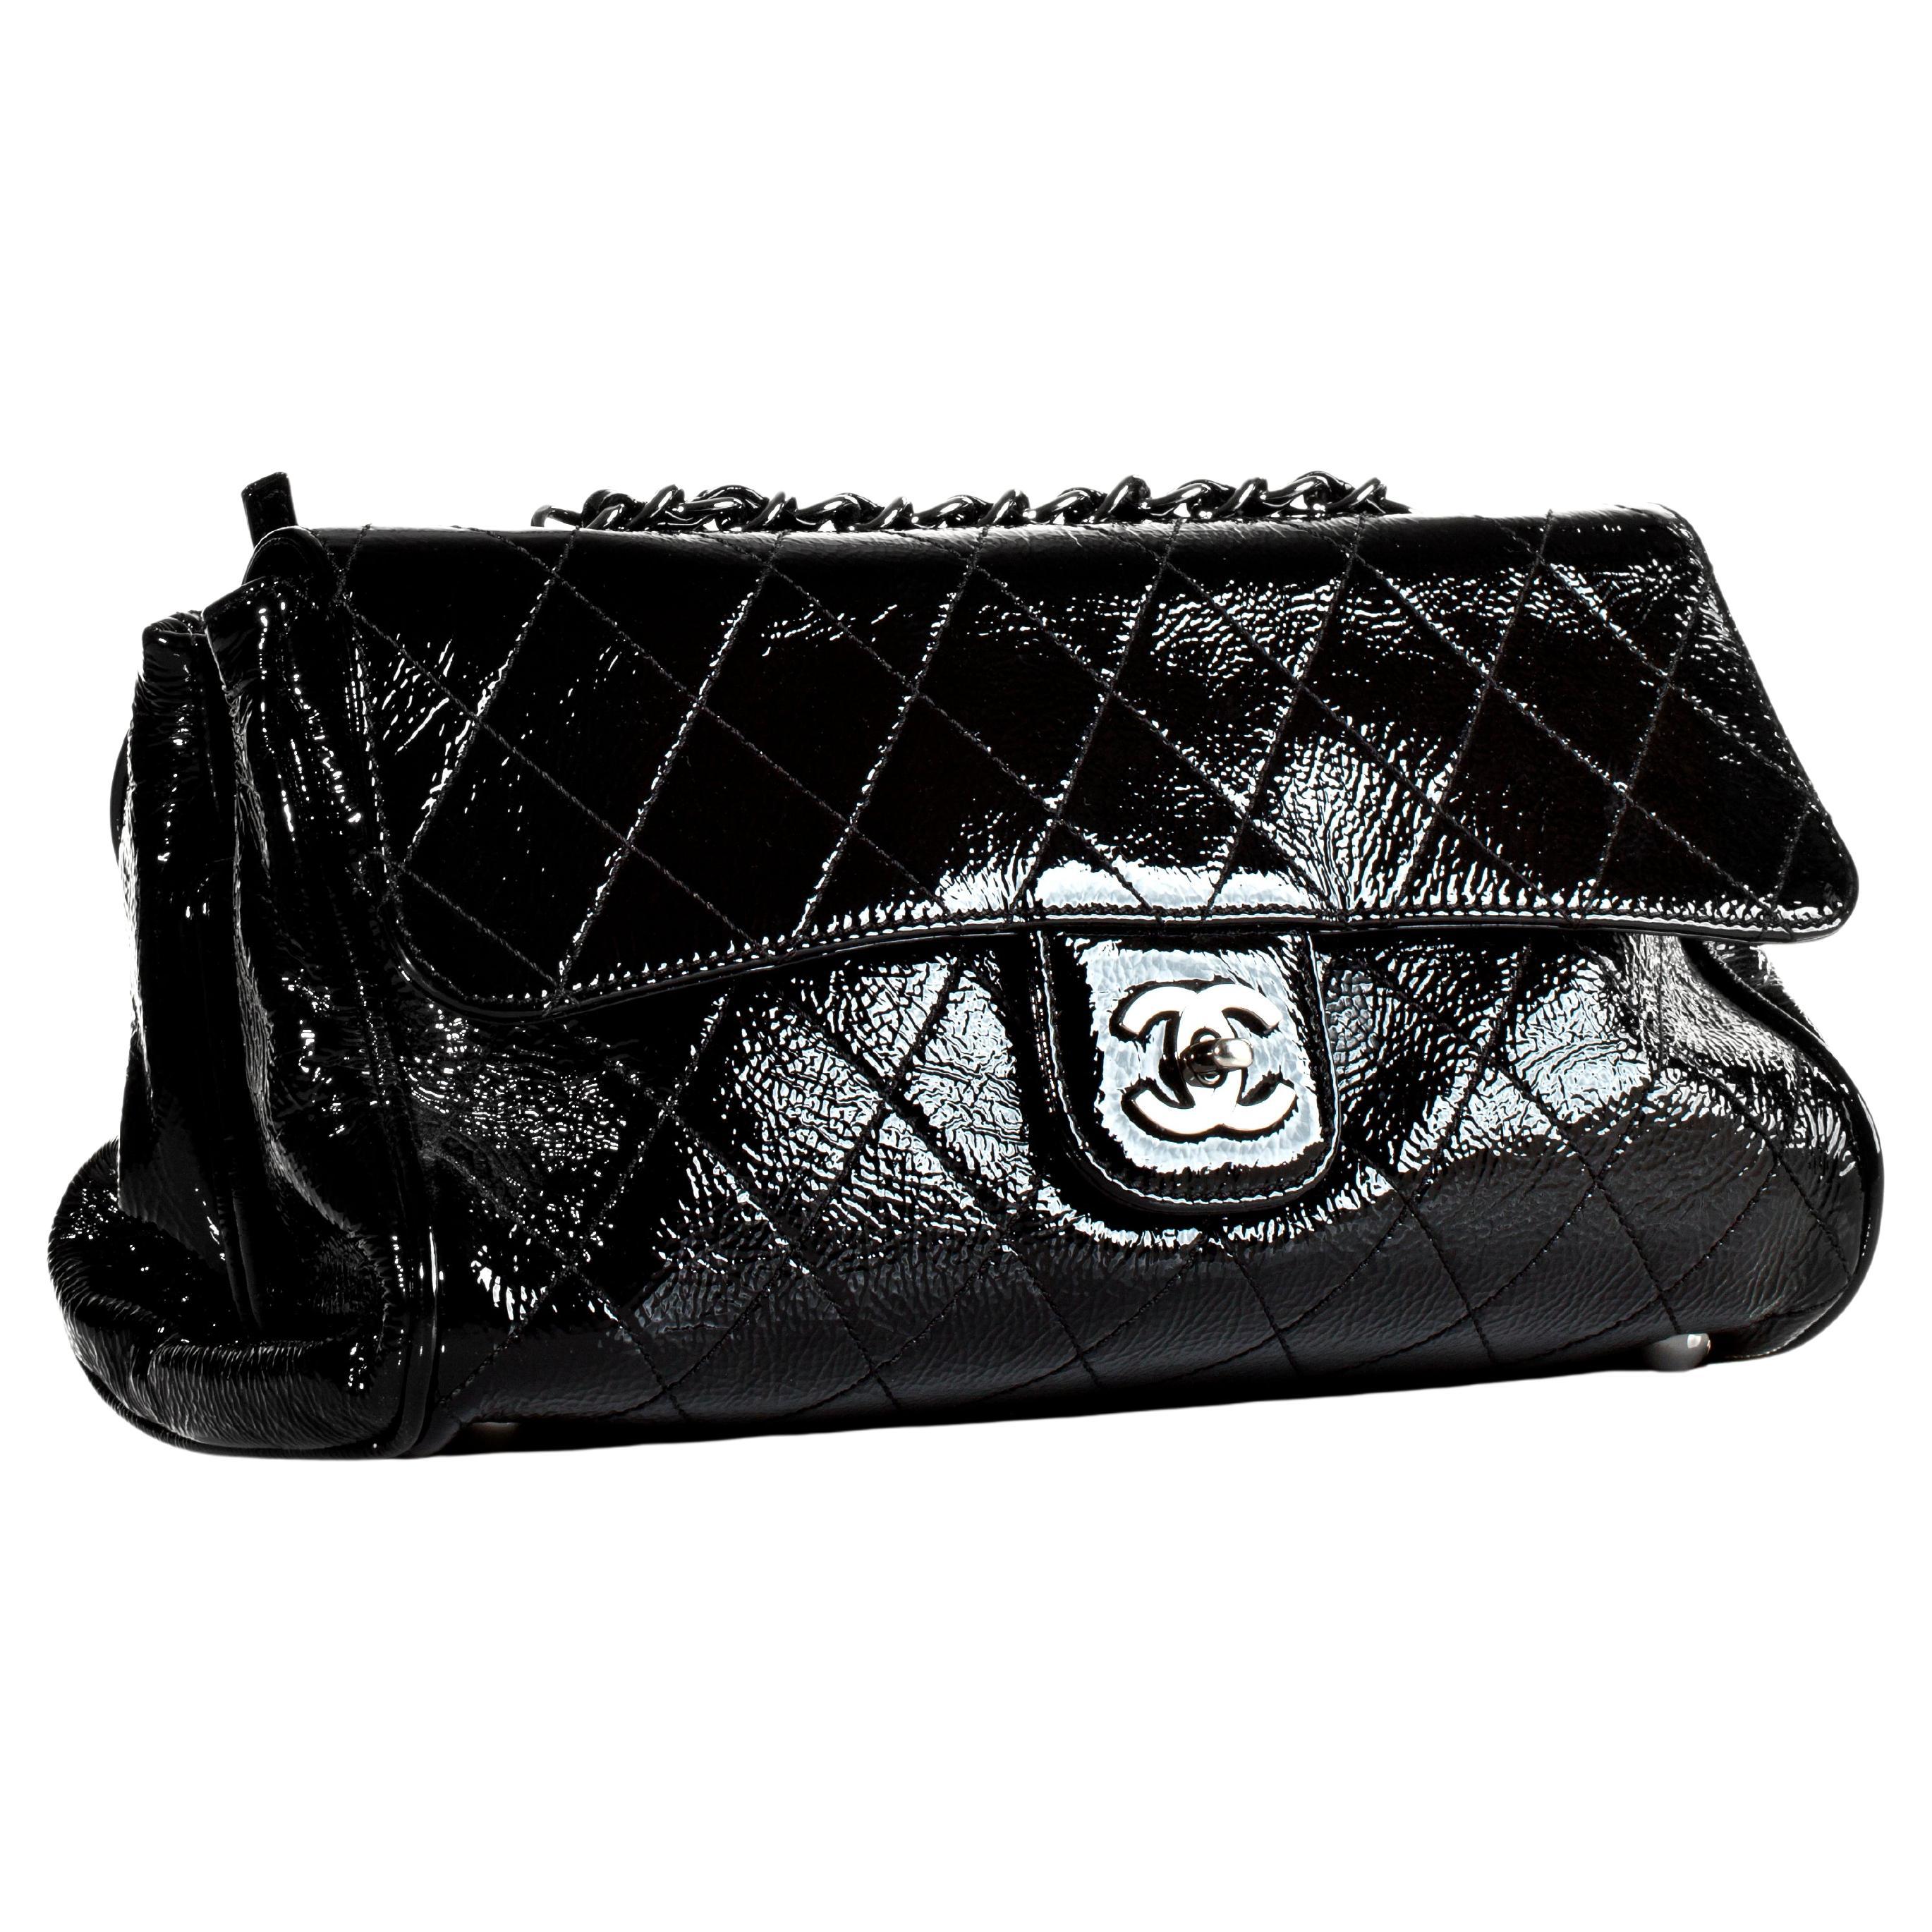 Chanel 2006 Small Patent Flap Bag Kiss lock Multi Compartment Shoulder Tote Bag In Good Condition For Sale In Miami, FL